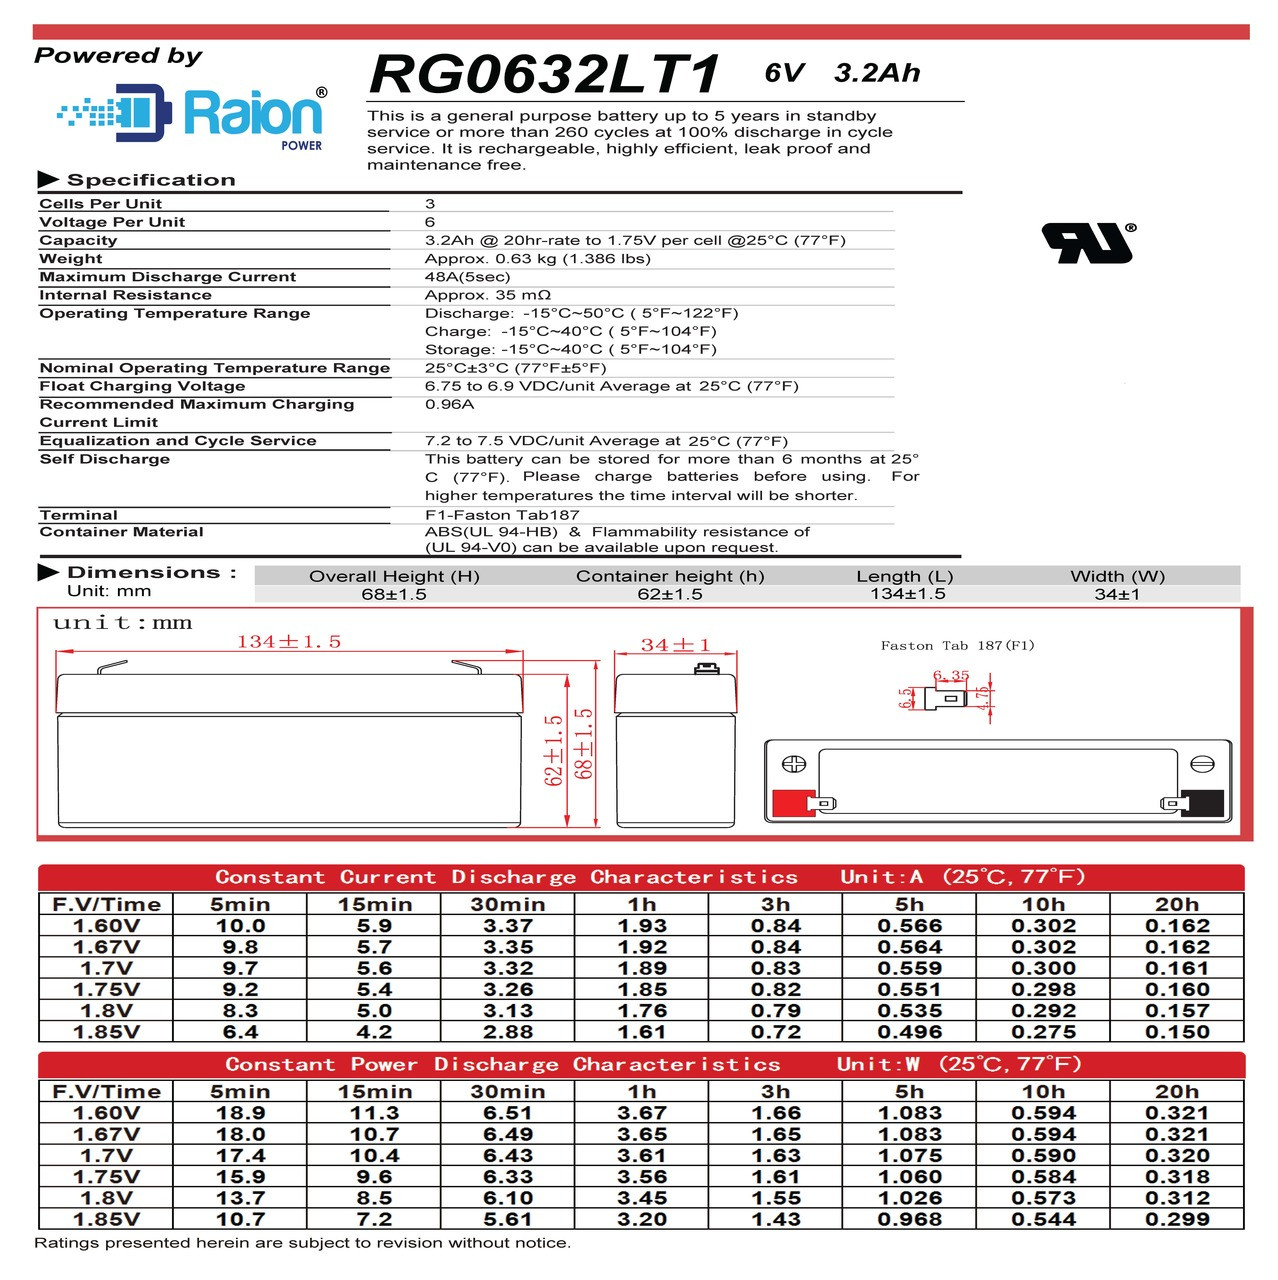 Raion Power RG0632LT1 6V 3.2Ah Battery Data Sheet for Medical Technology Products 1000 Pump